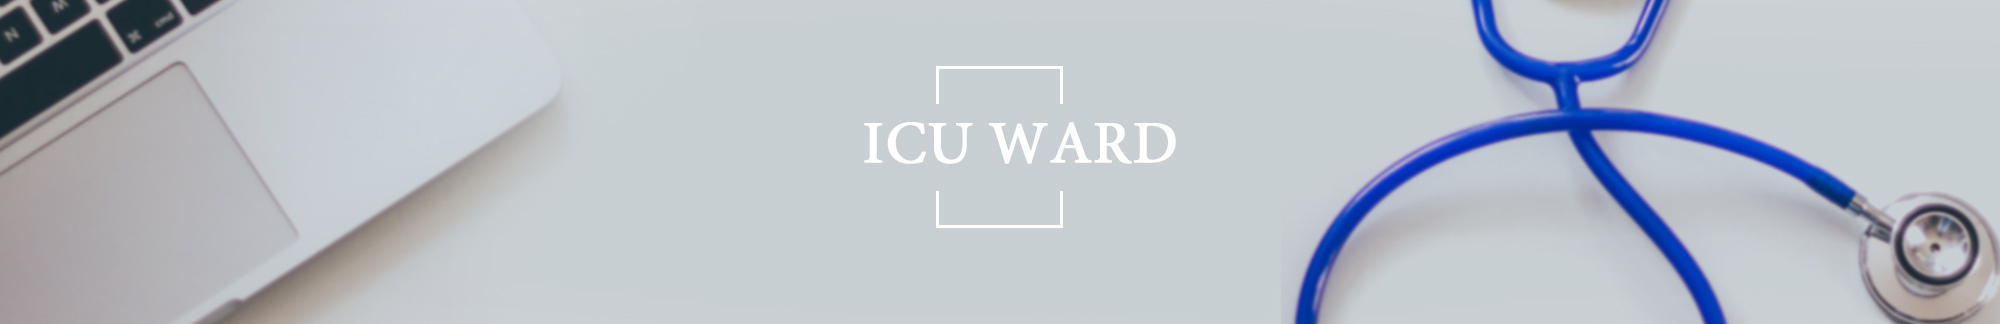 Icu Ward